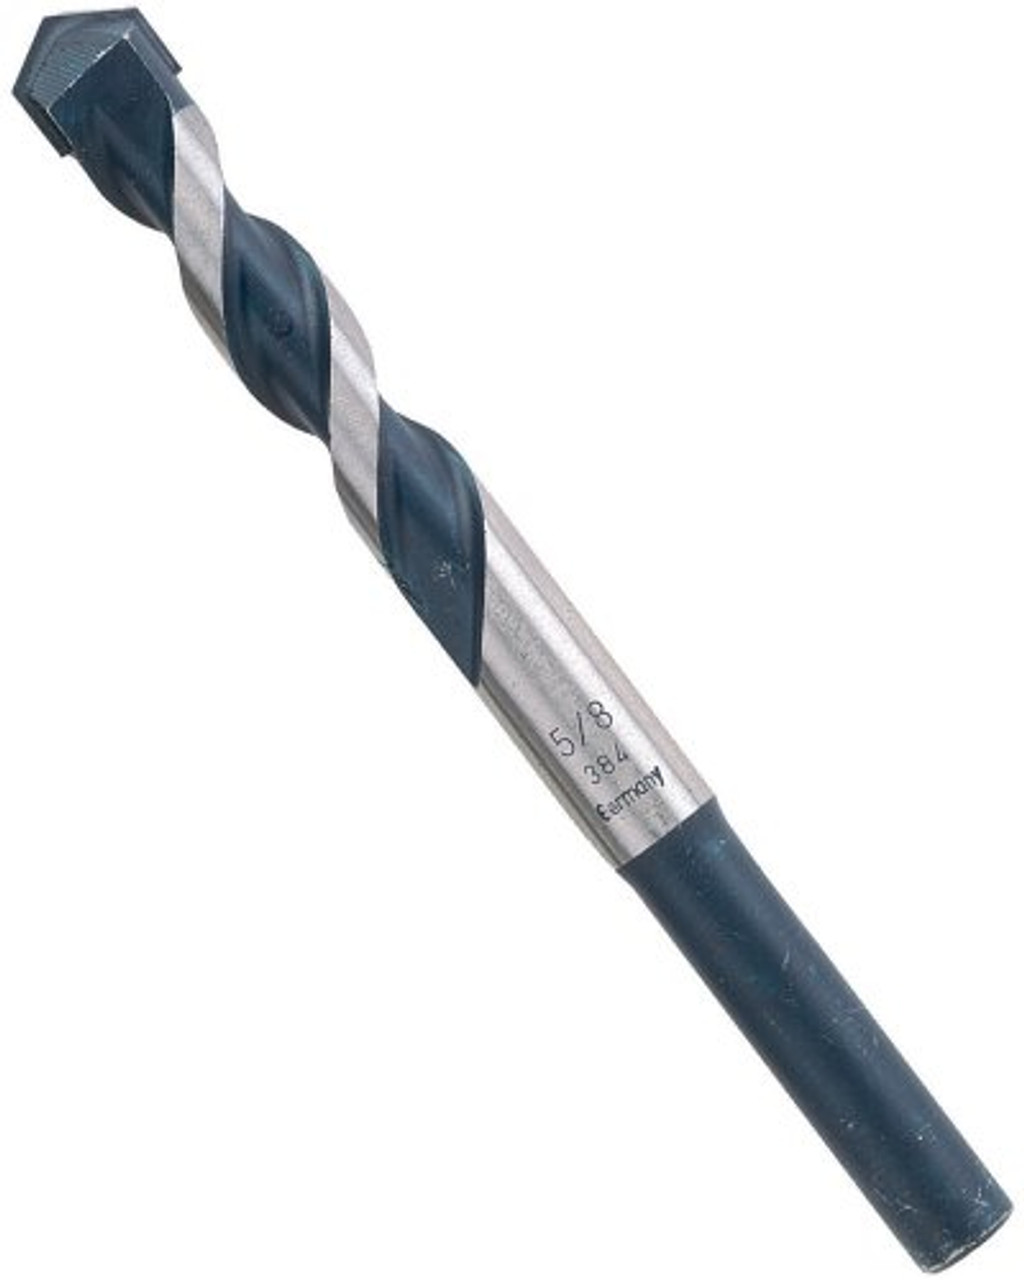 Bosch HCBG18 Blue Granite Hammer Drill Bit Carbide Tip 1/2 x 10 x 12